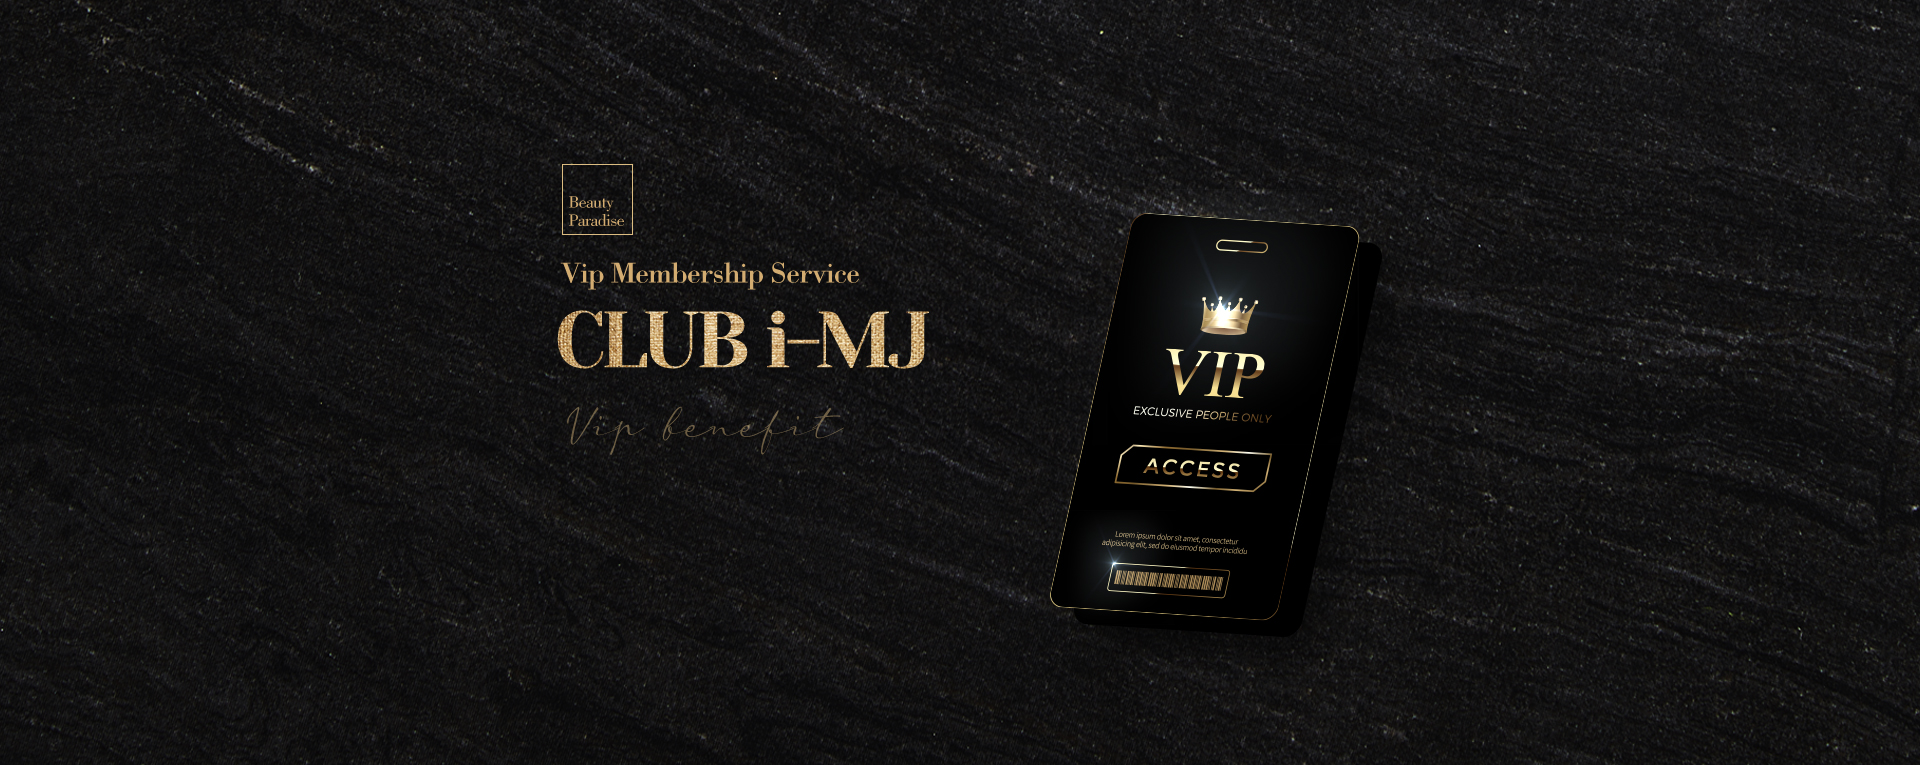 VipMembershipService,Vip,Membership,Service,CLUB,i-MJ,CLUBiMJ